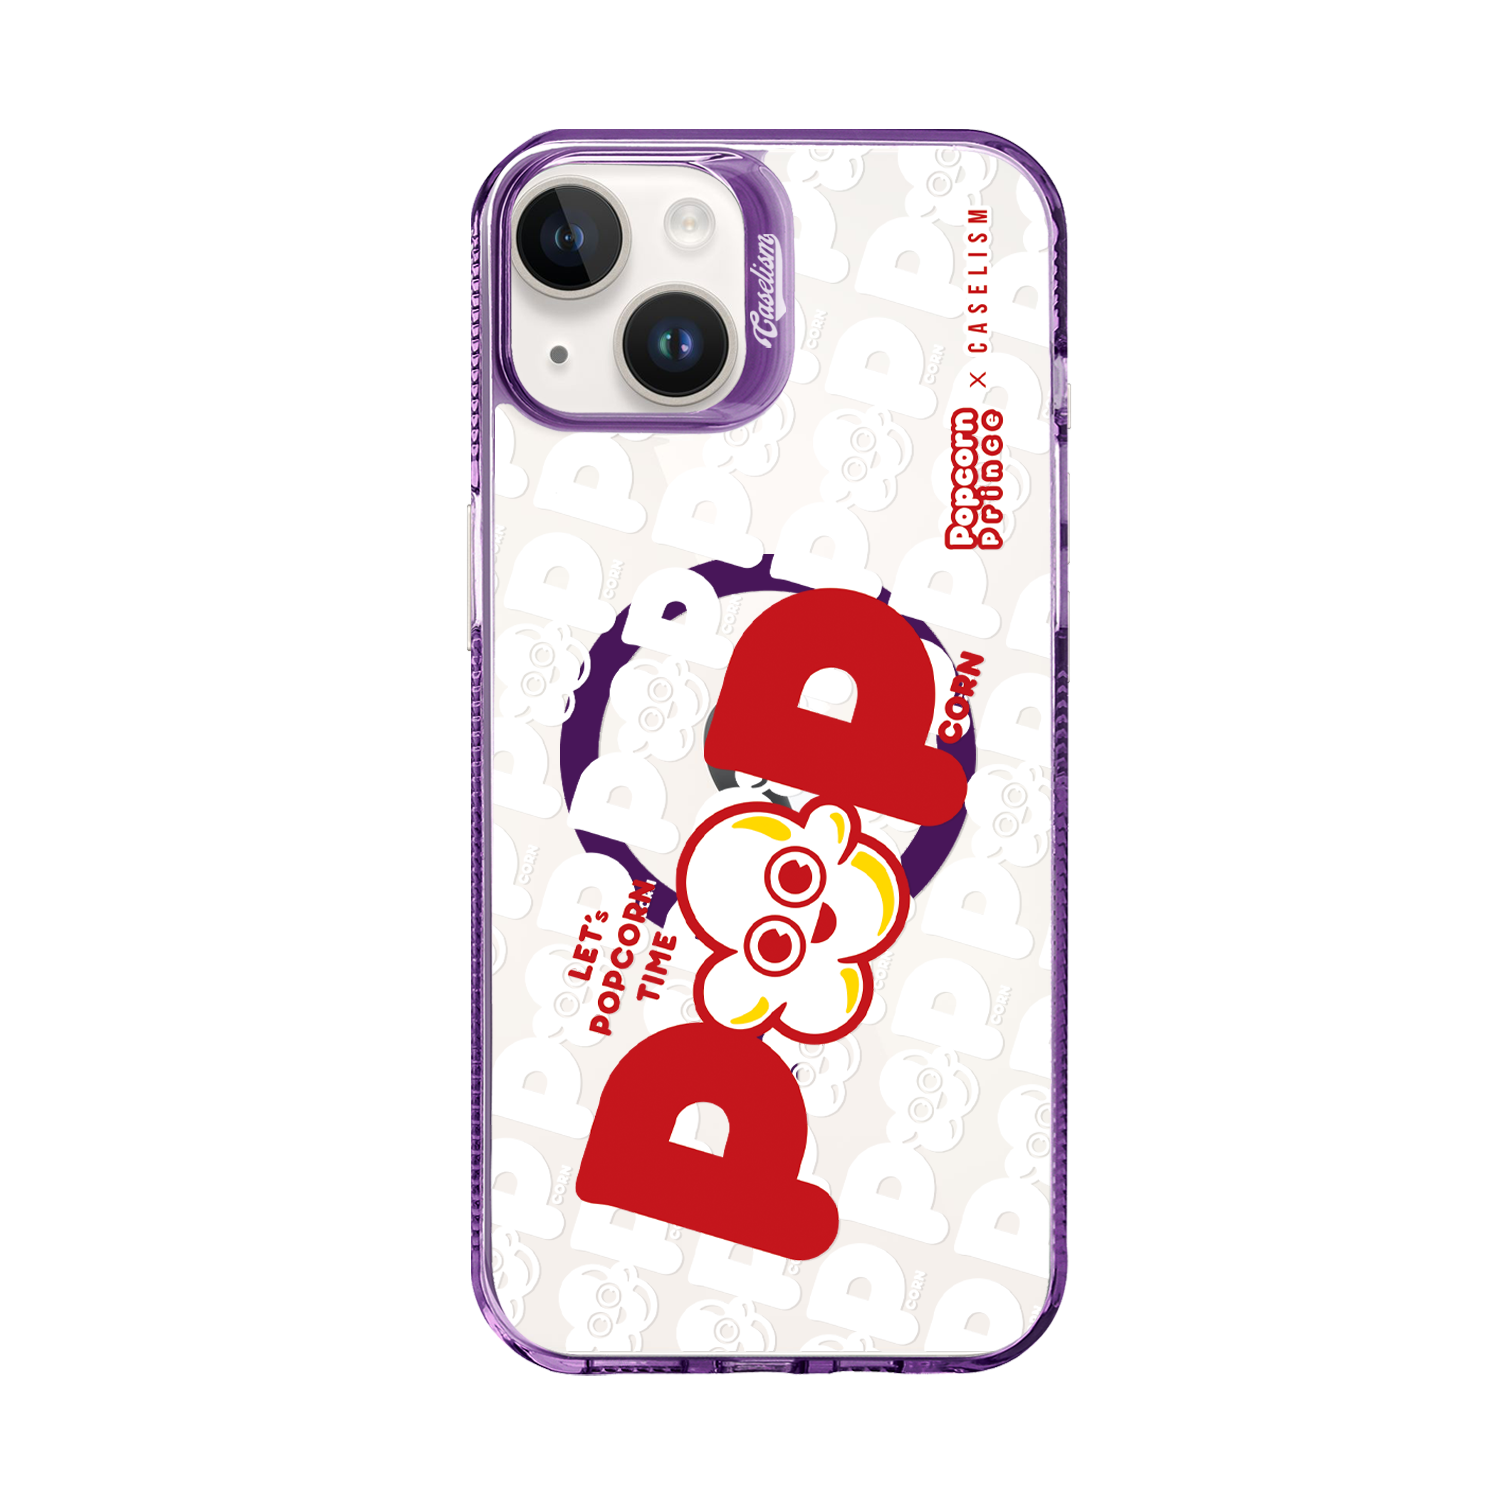 POPC003 - ColorLite Case for iPhone